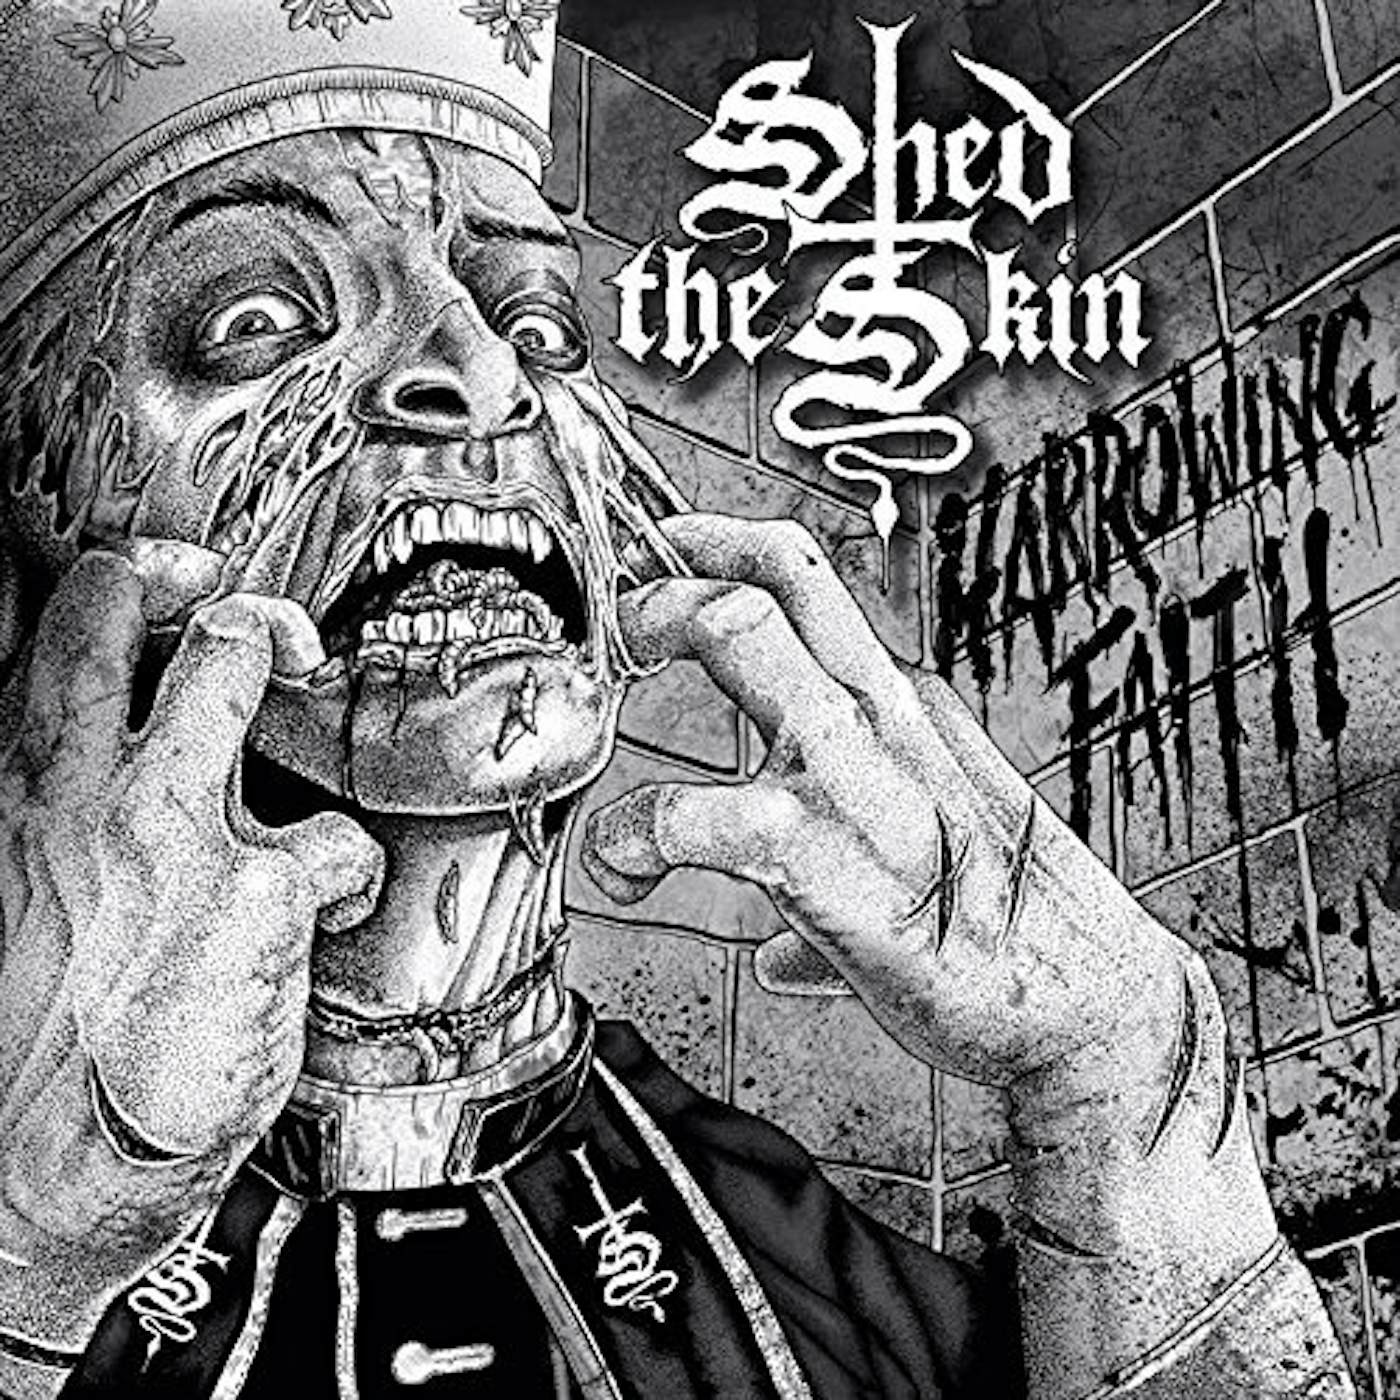 Shed the Skin Harrowing Faith Vinyl Record